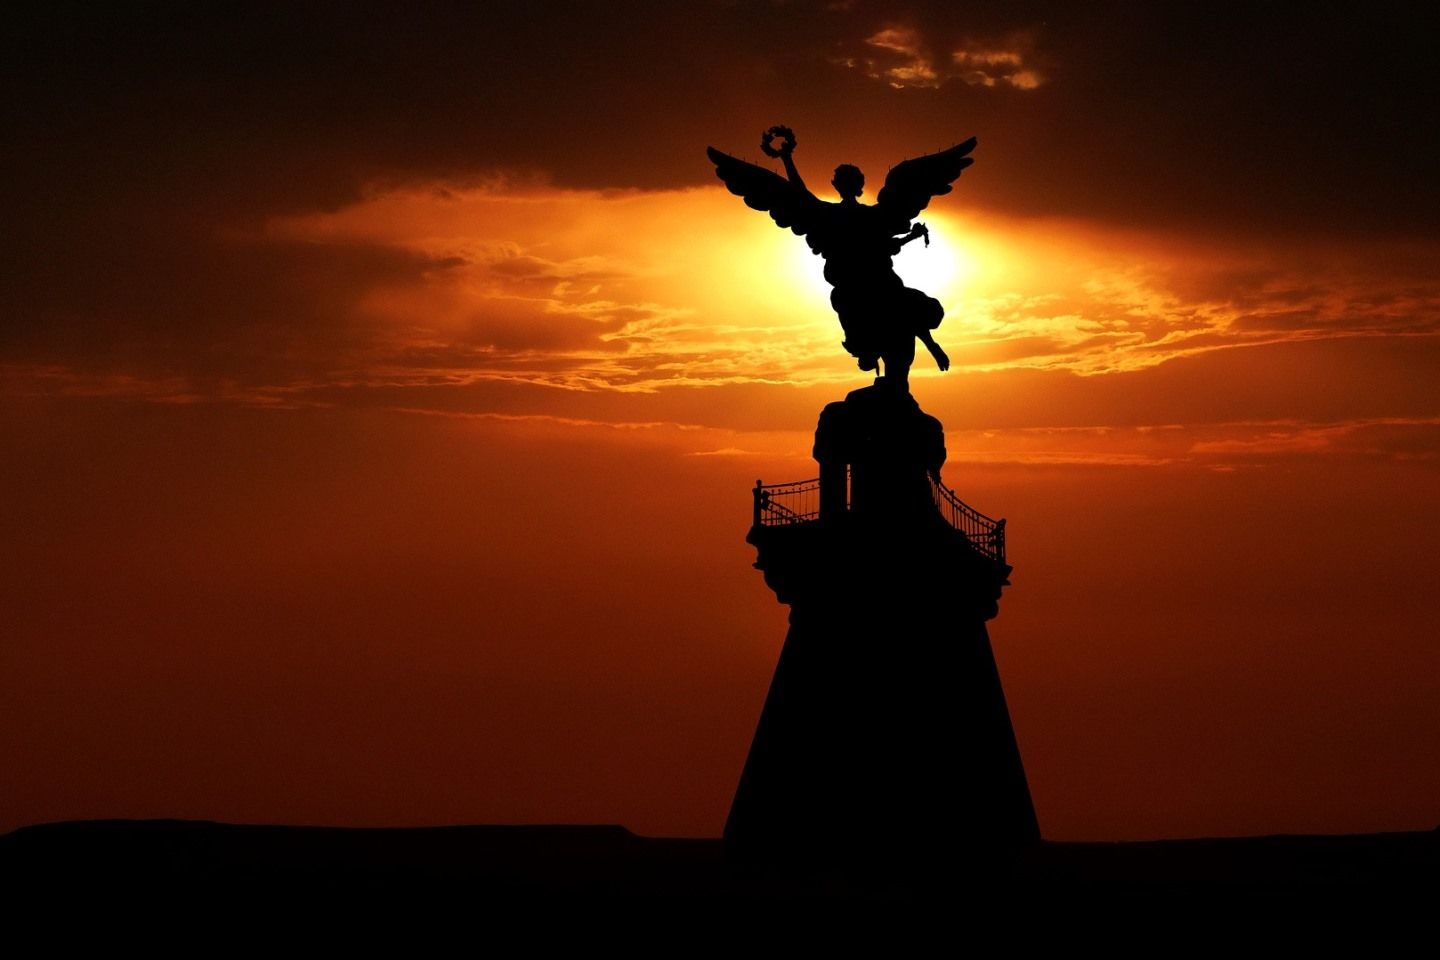 Victory Statue Sunset
Pixabay.com